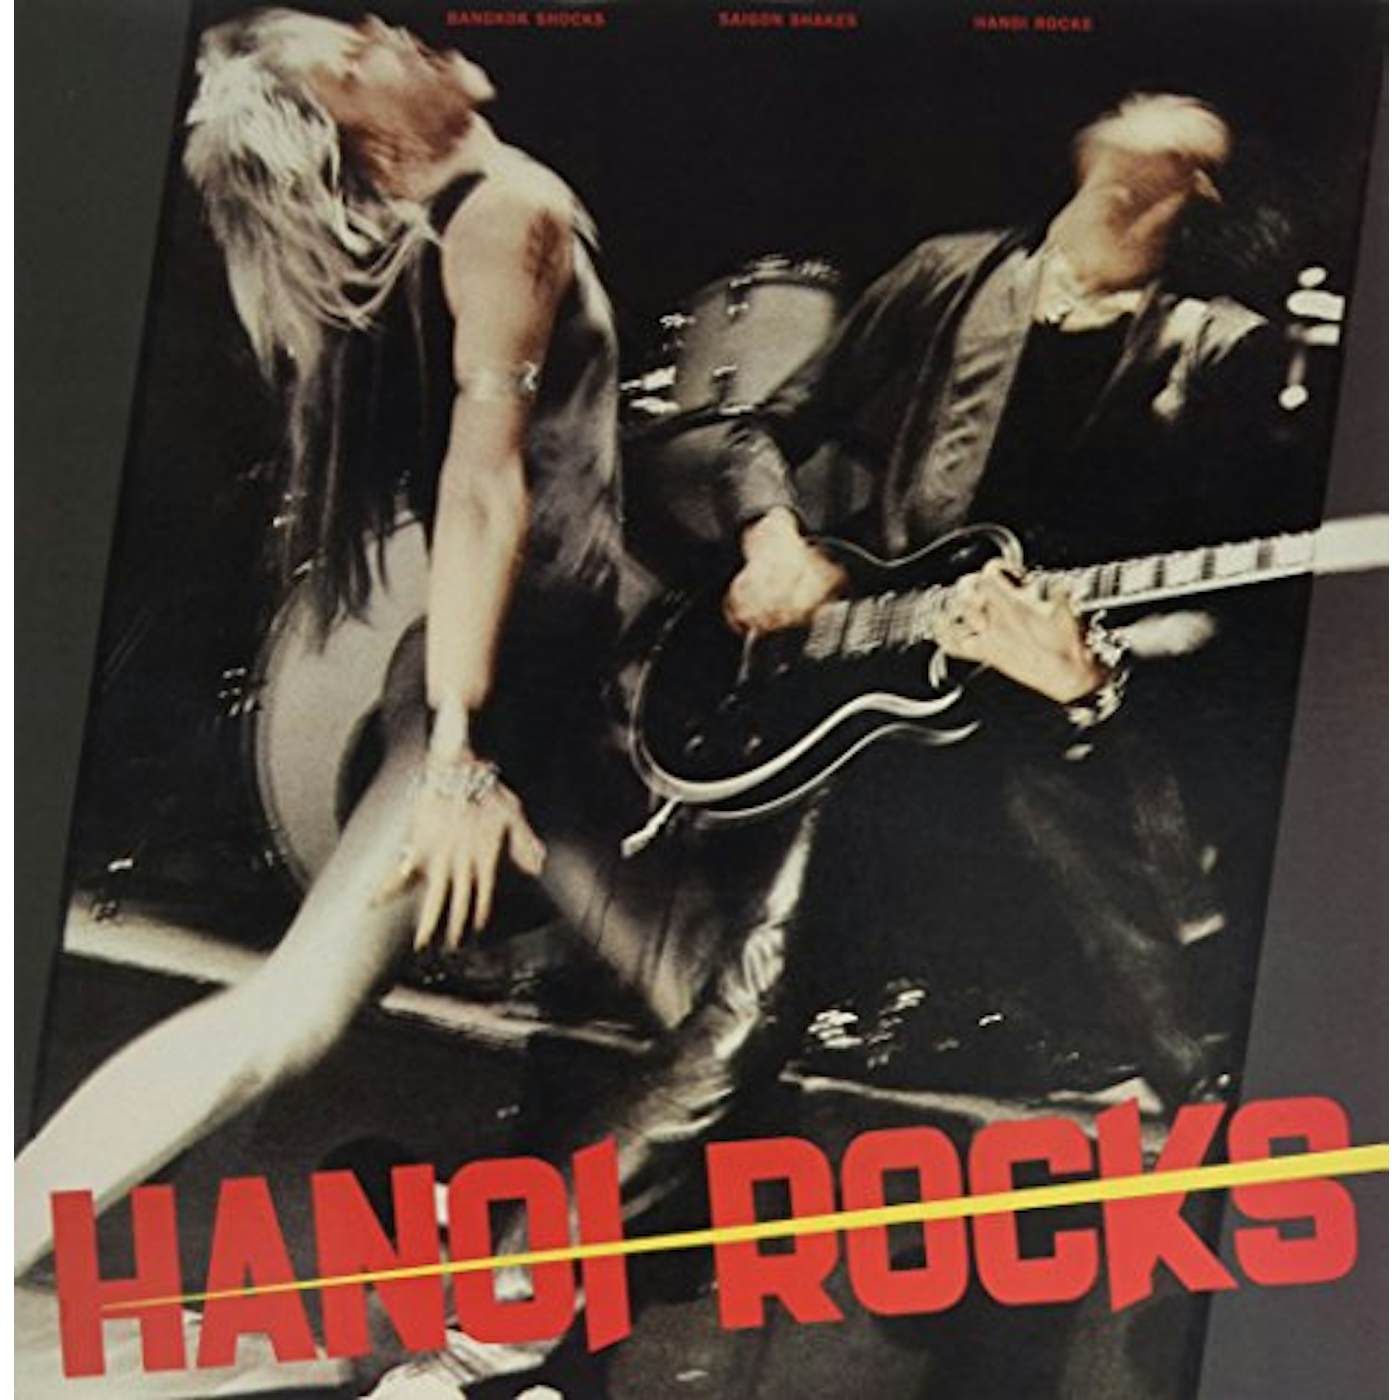 BANGKOK SHOCKS SAIGON SHAKES HANOI ROCKS Vinyl Record